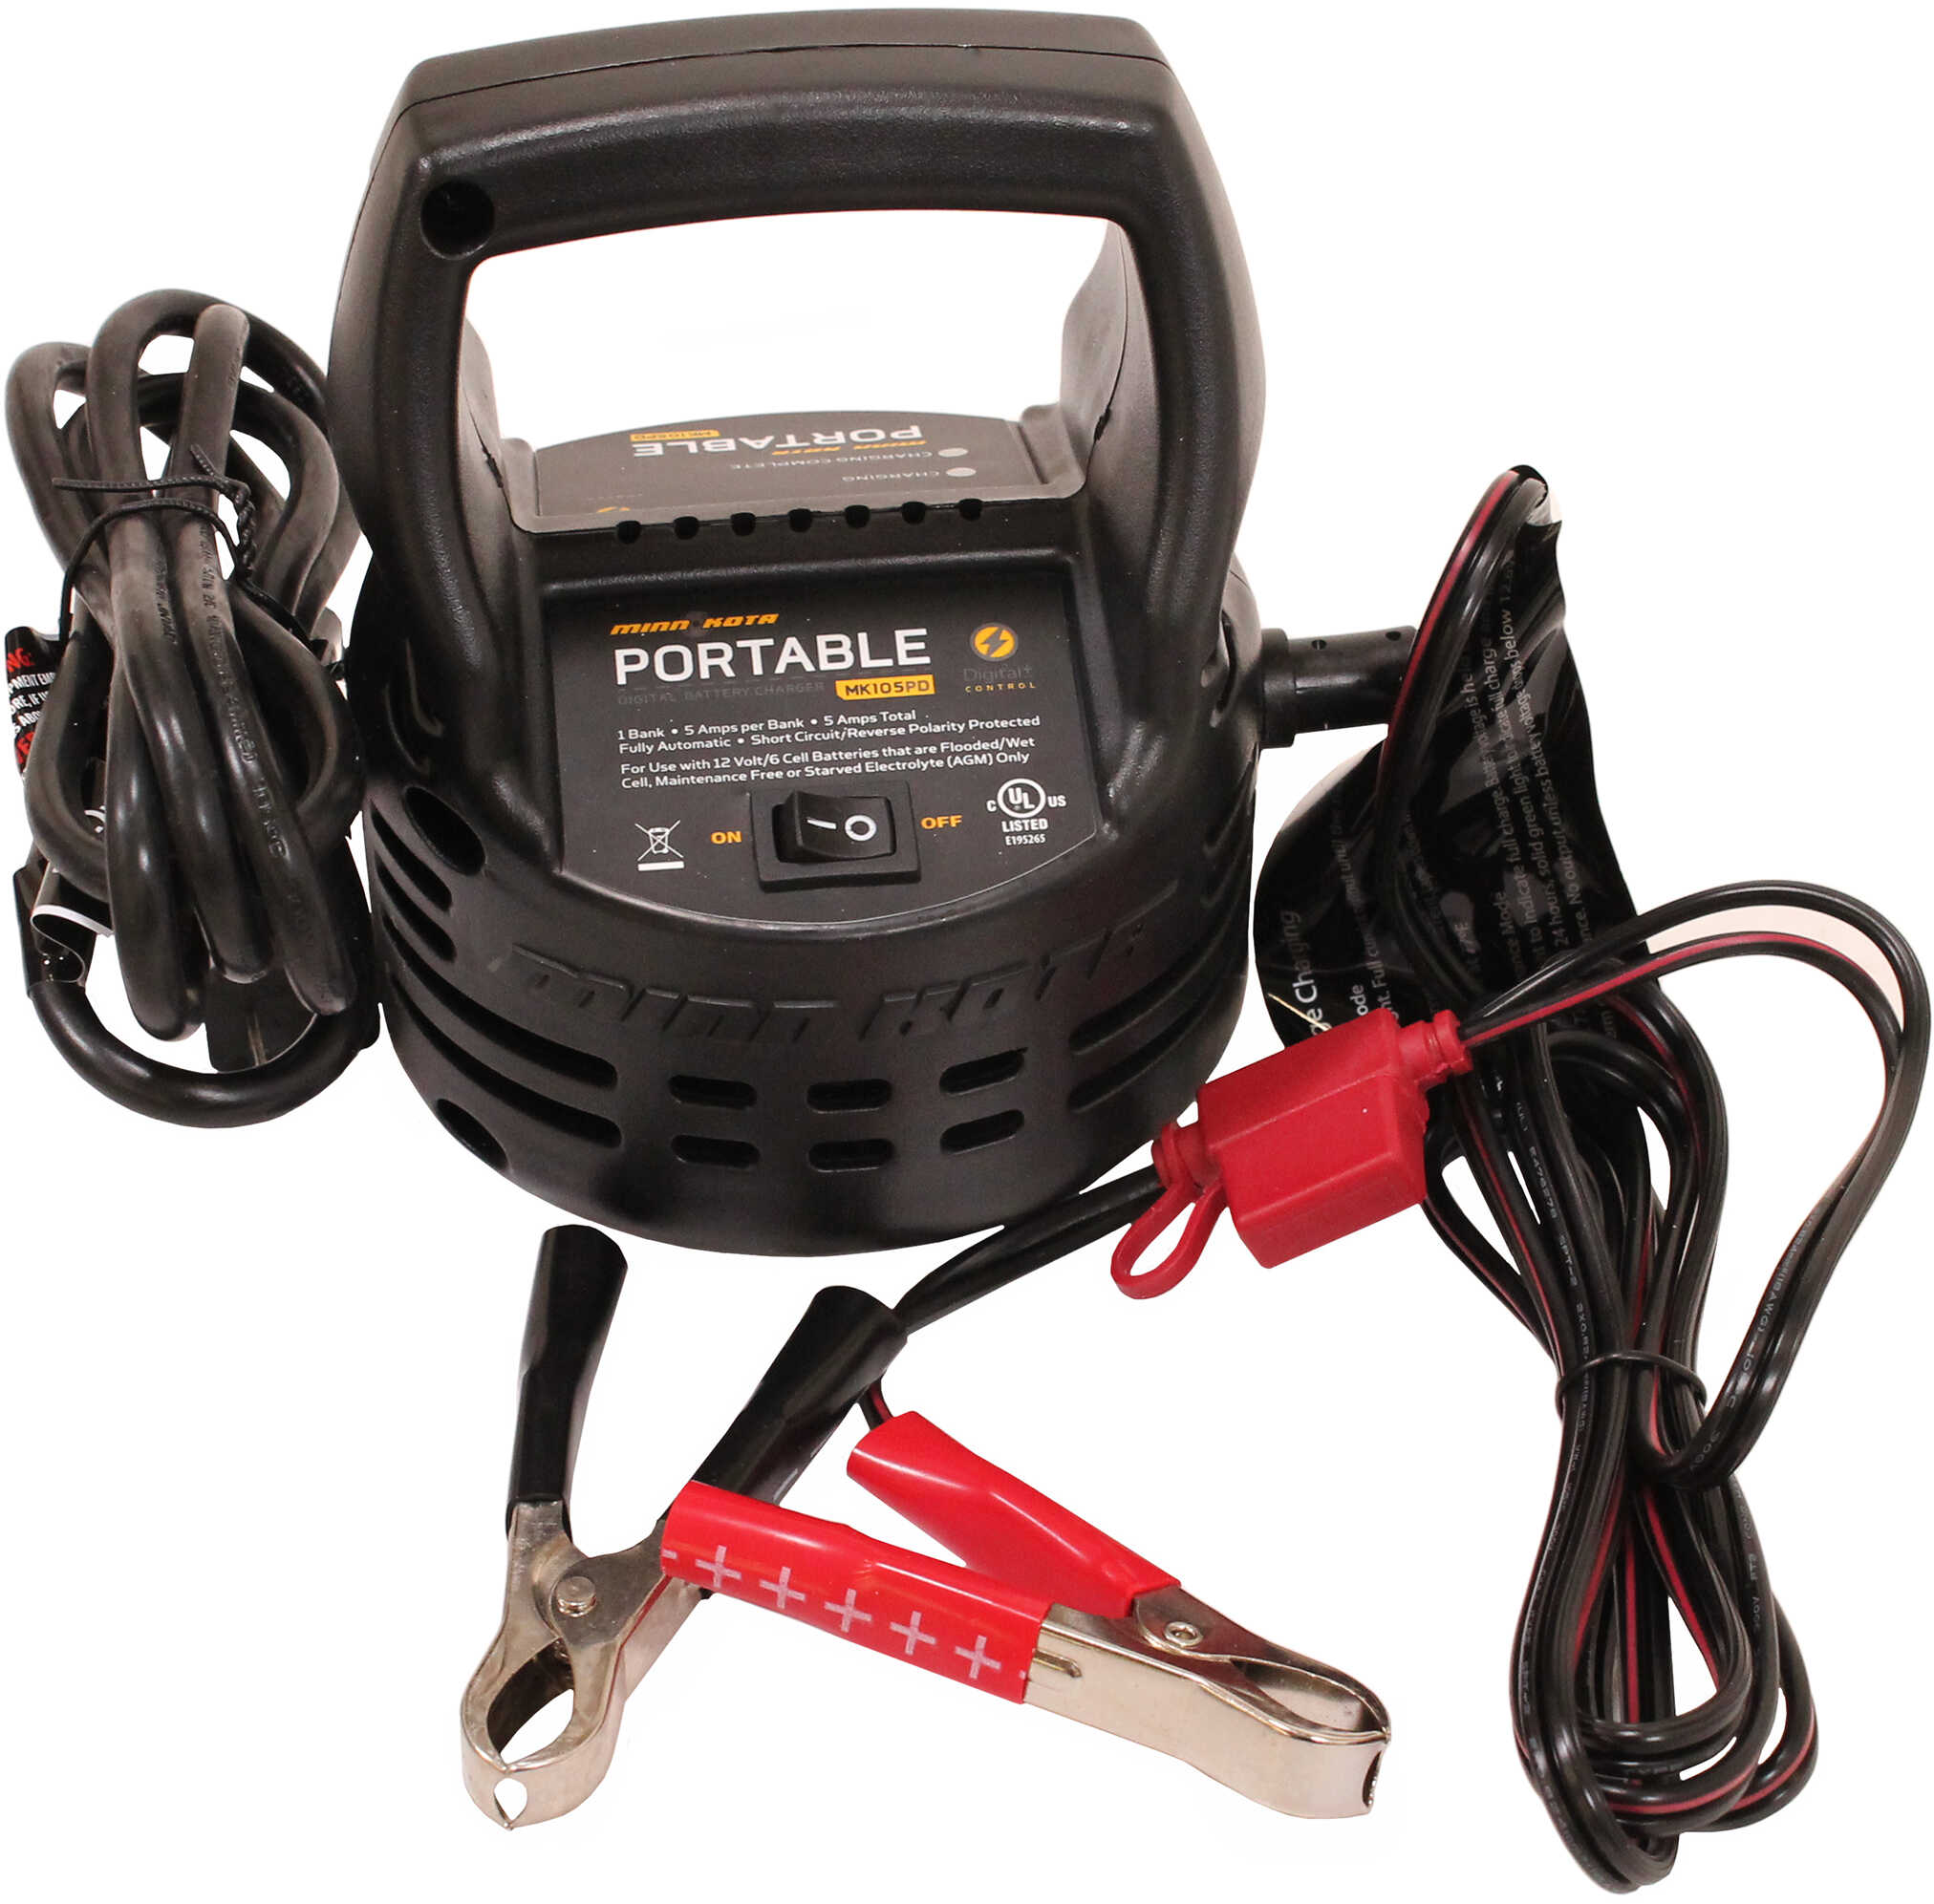 Minn Kota MK-105PD Portable Digital Charger - 1 Bank &amp; 5 Amp